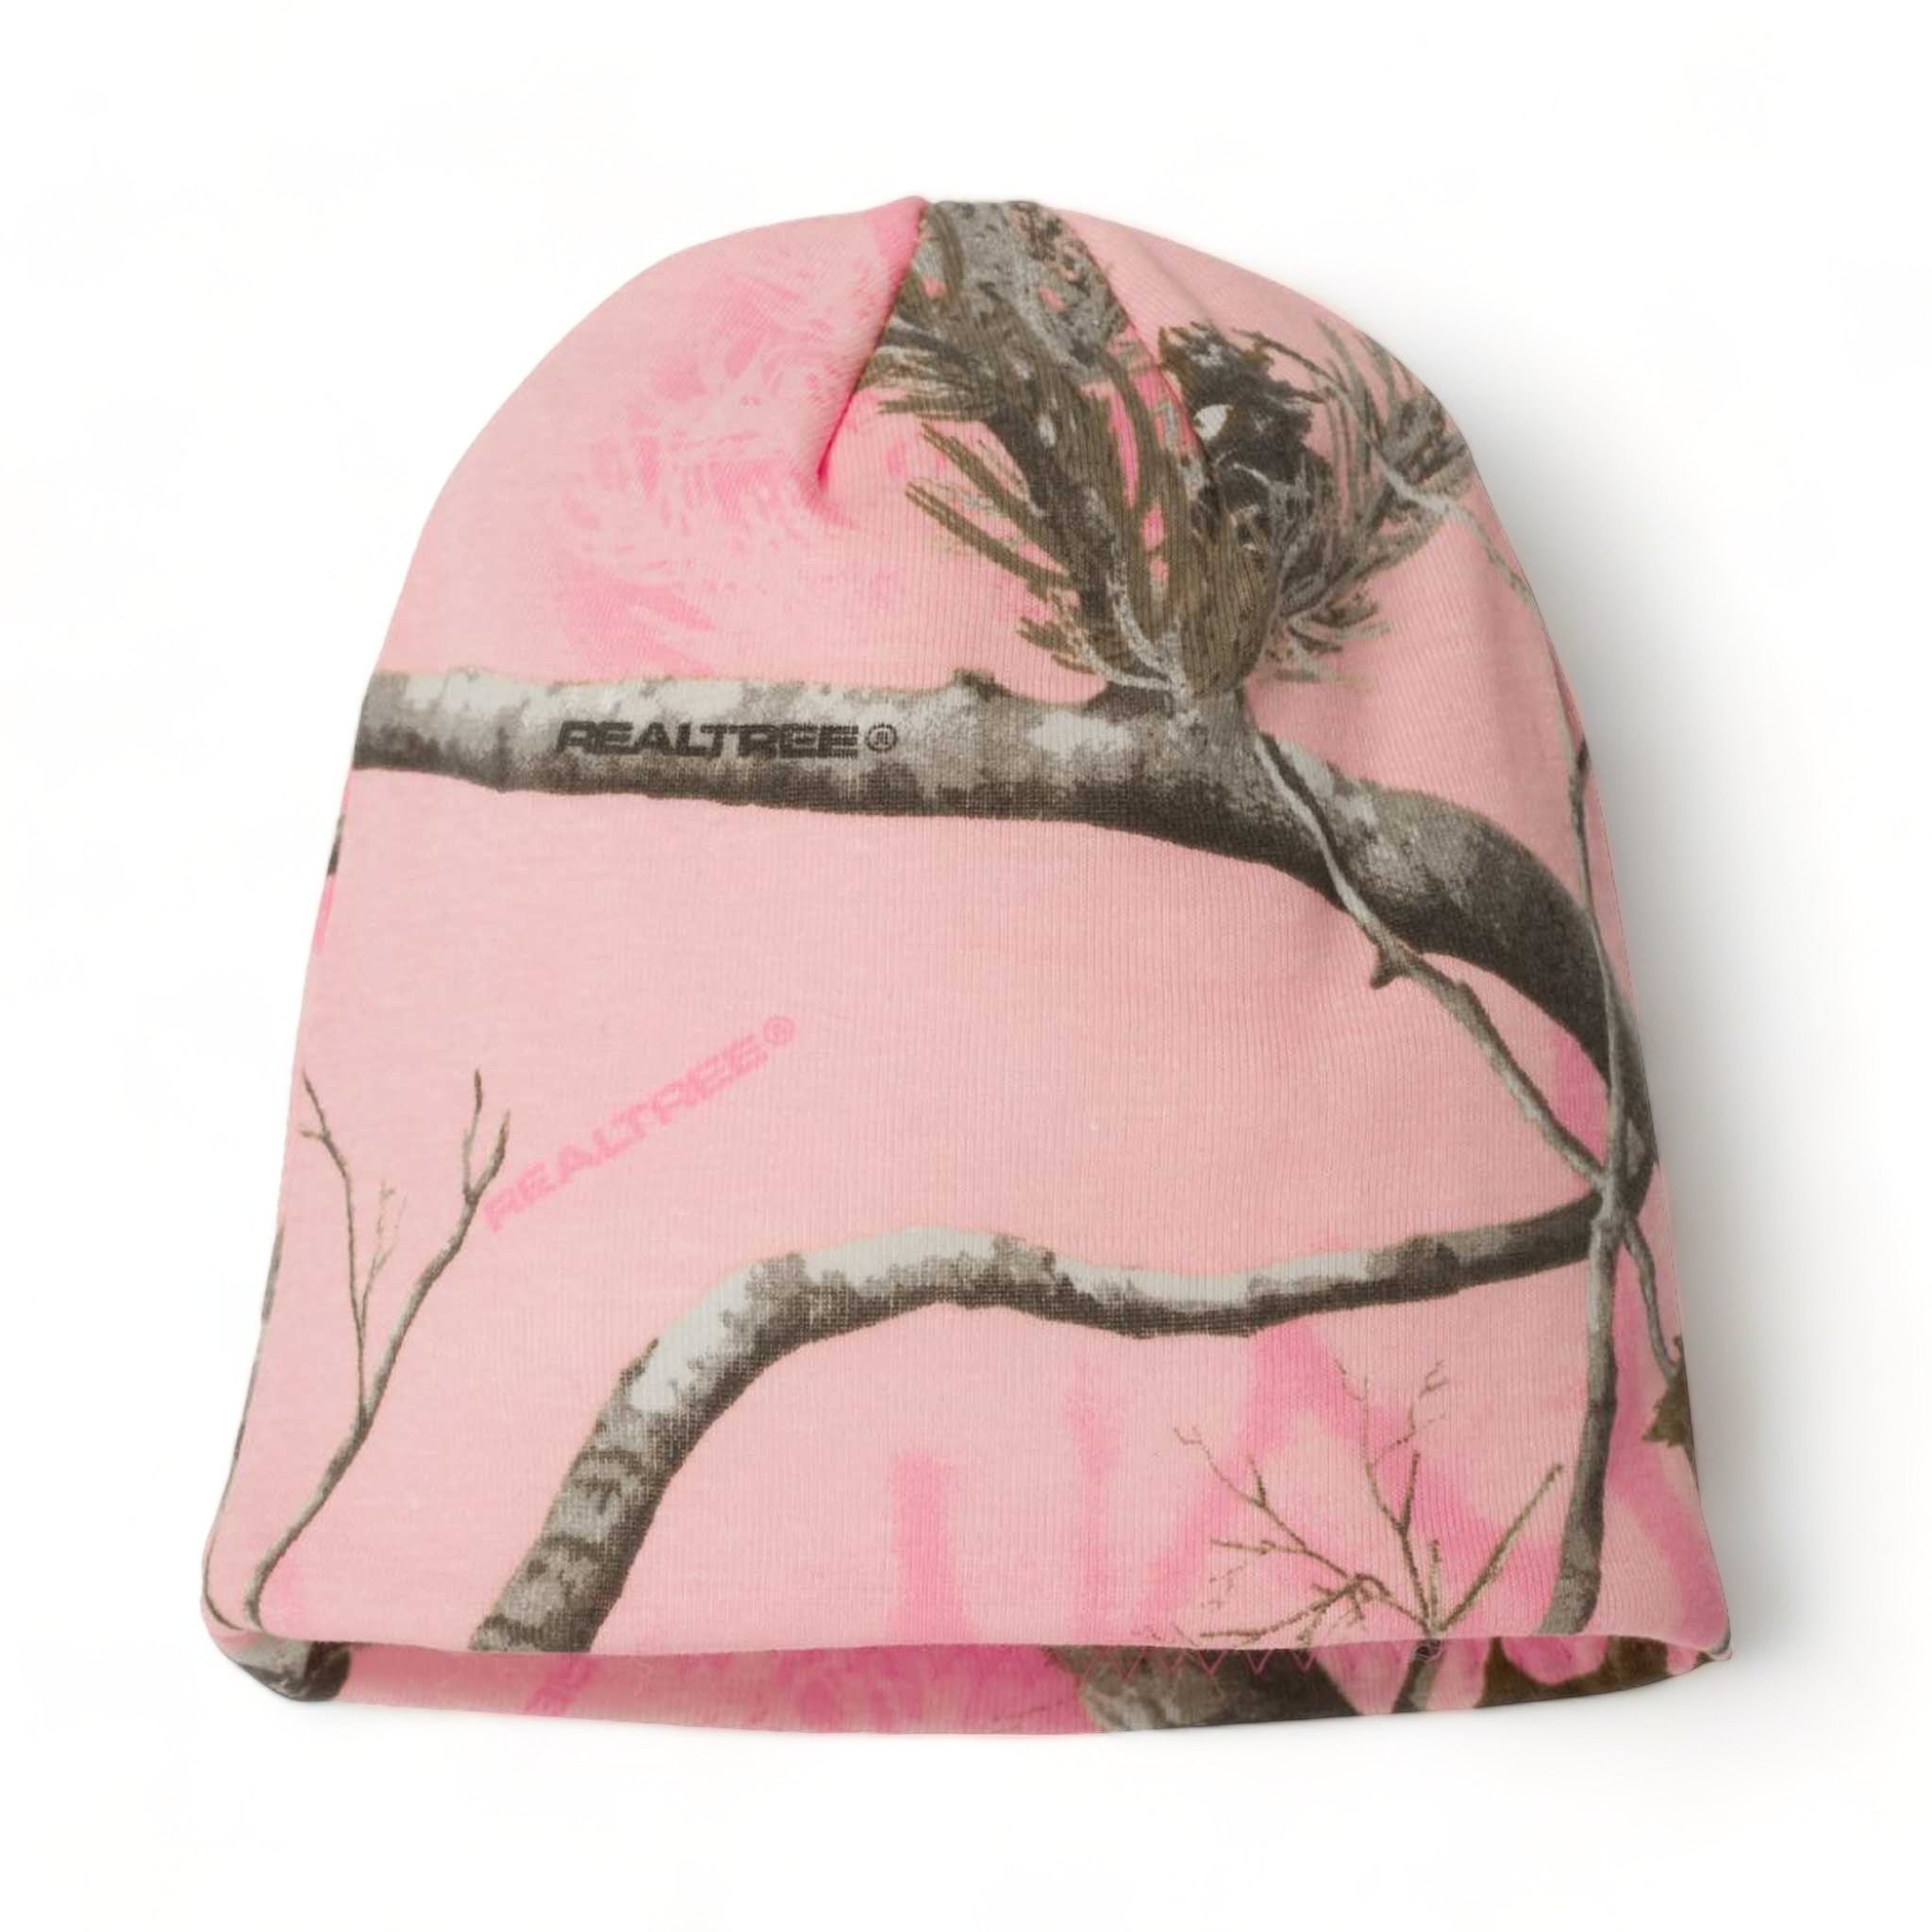 Side view of Kati LCB08 custom hat in pink realtree ap